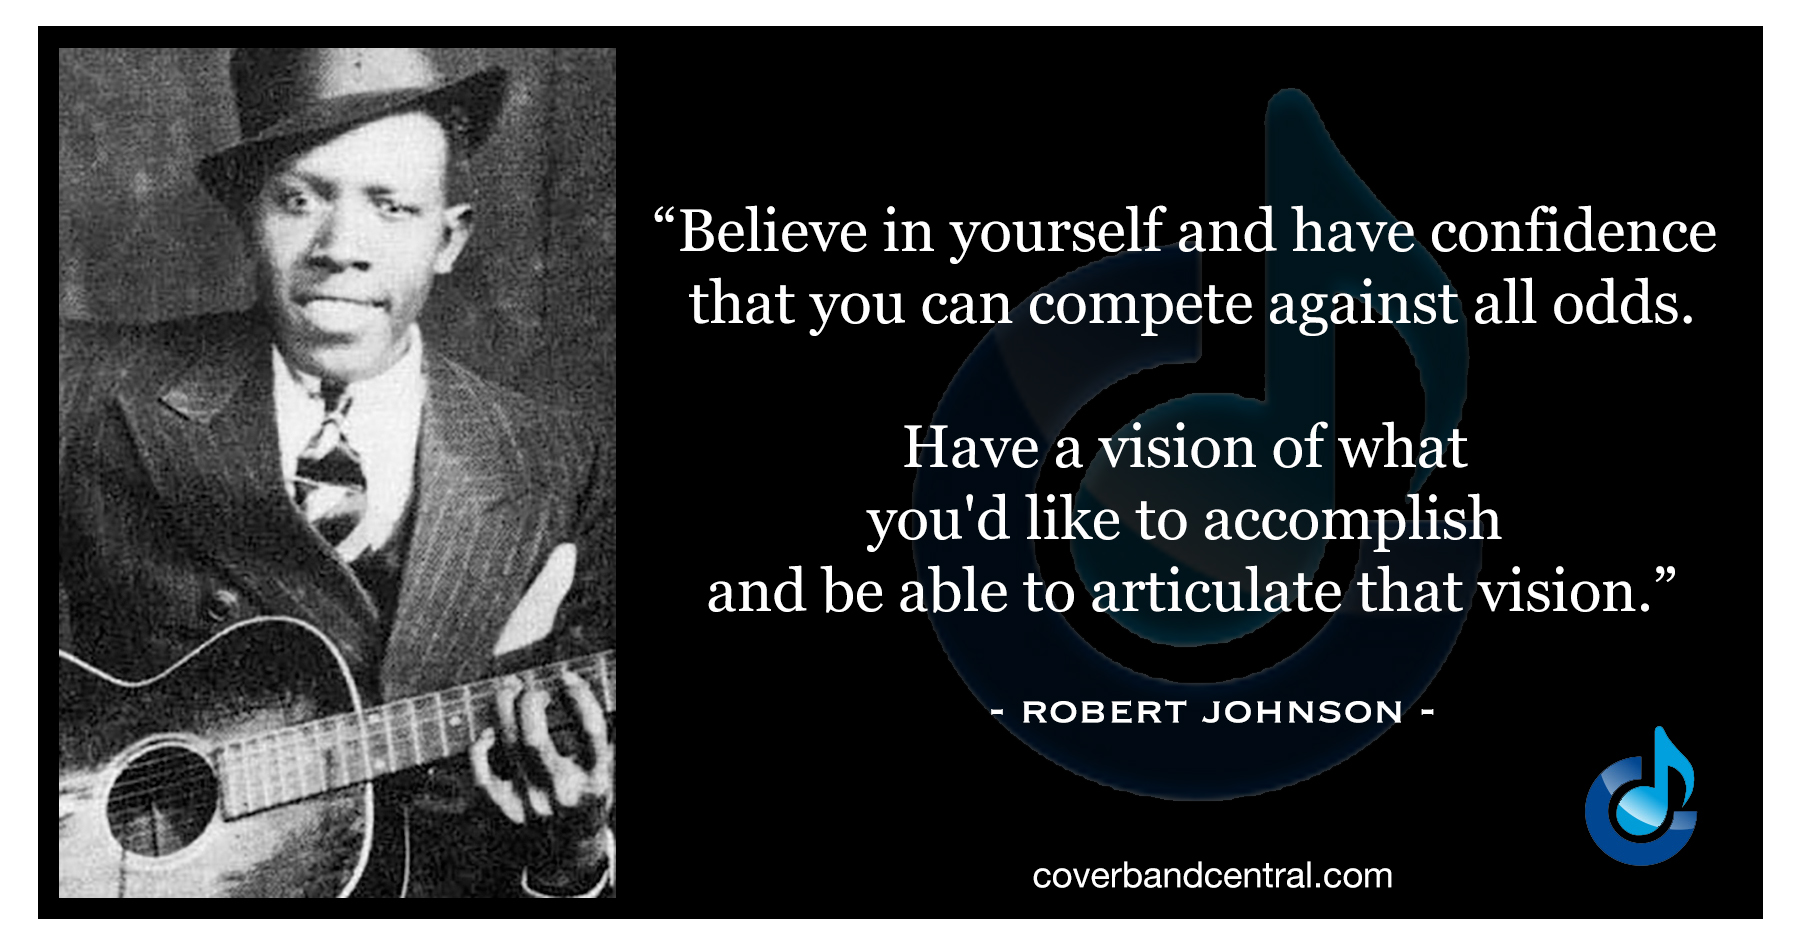 Robert Johnson quote